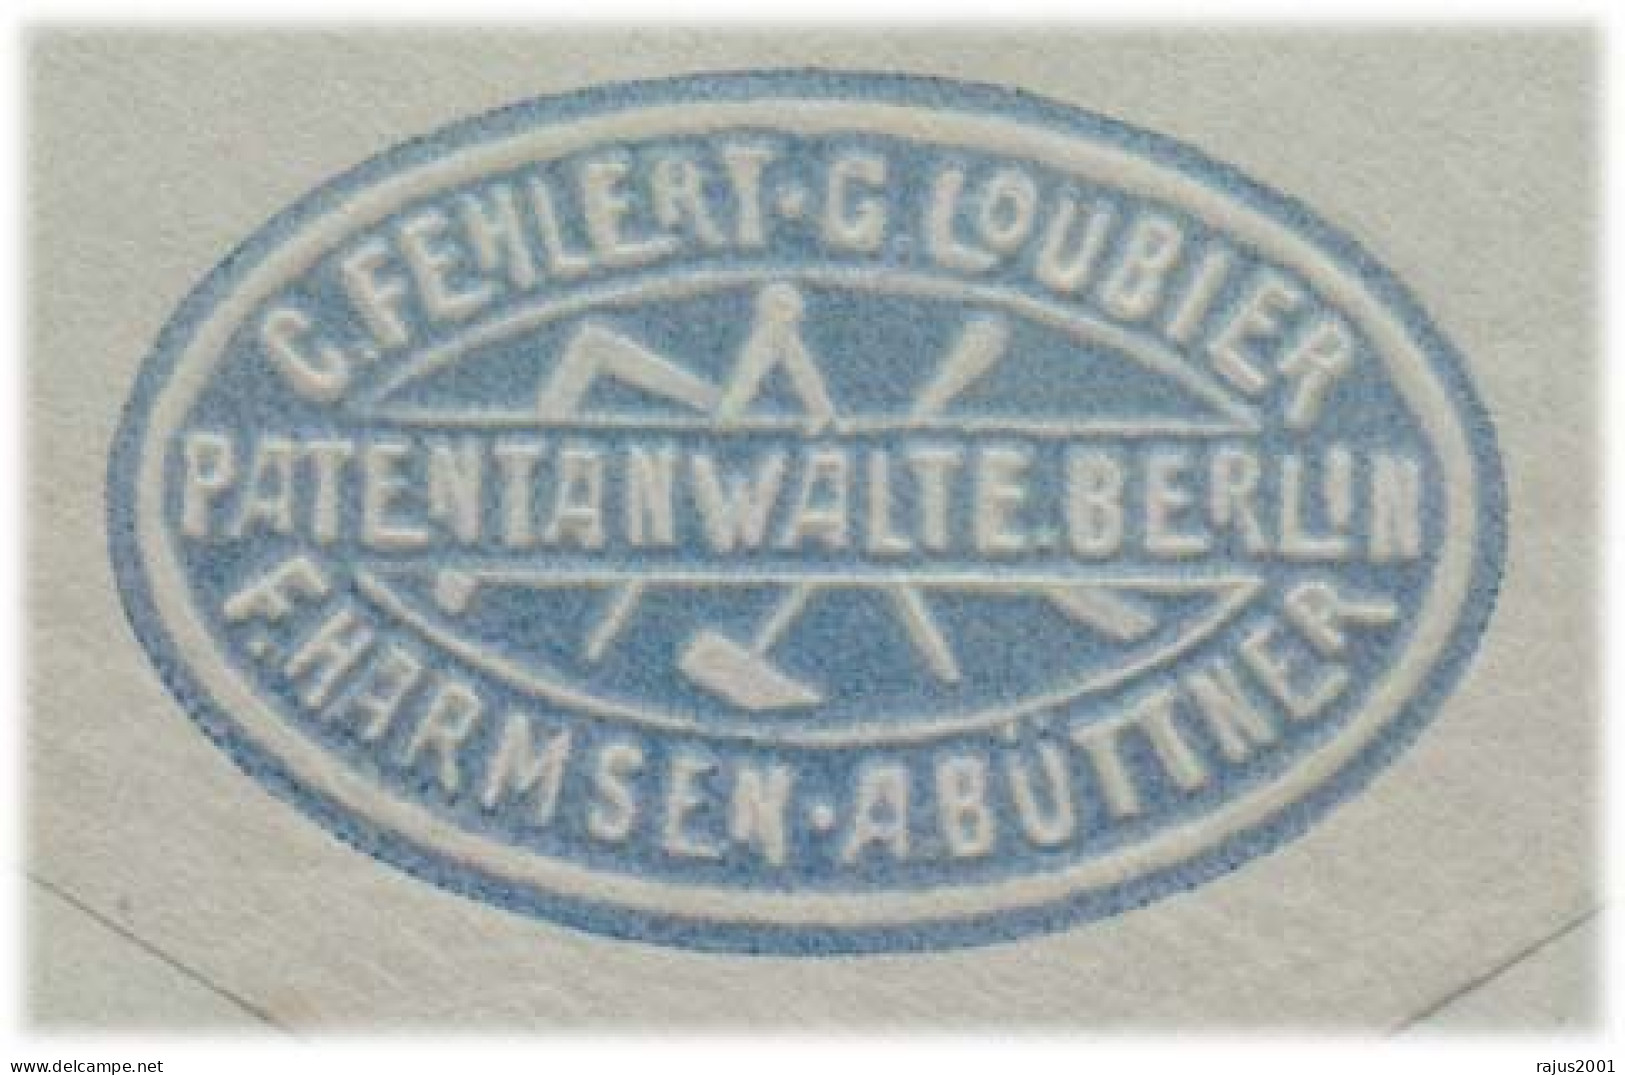 Deutsches Reich Berlin 1906, Received Cyrus Kehr  Germany Postal Stationery Cover - Omslagen